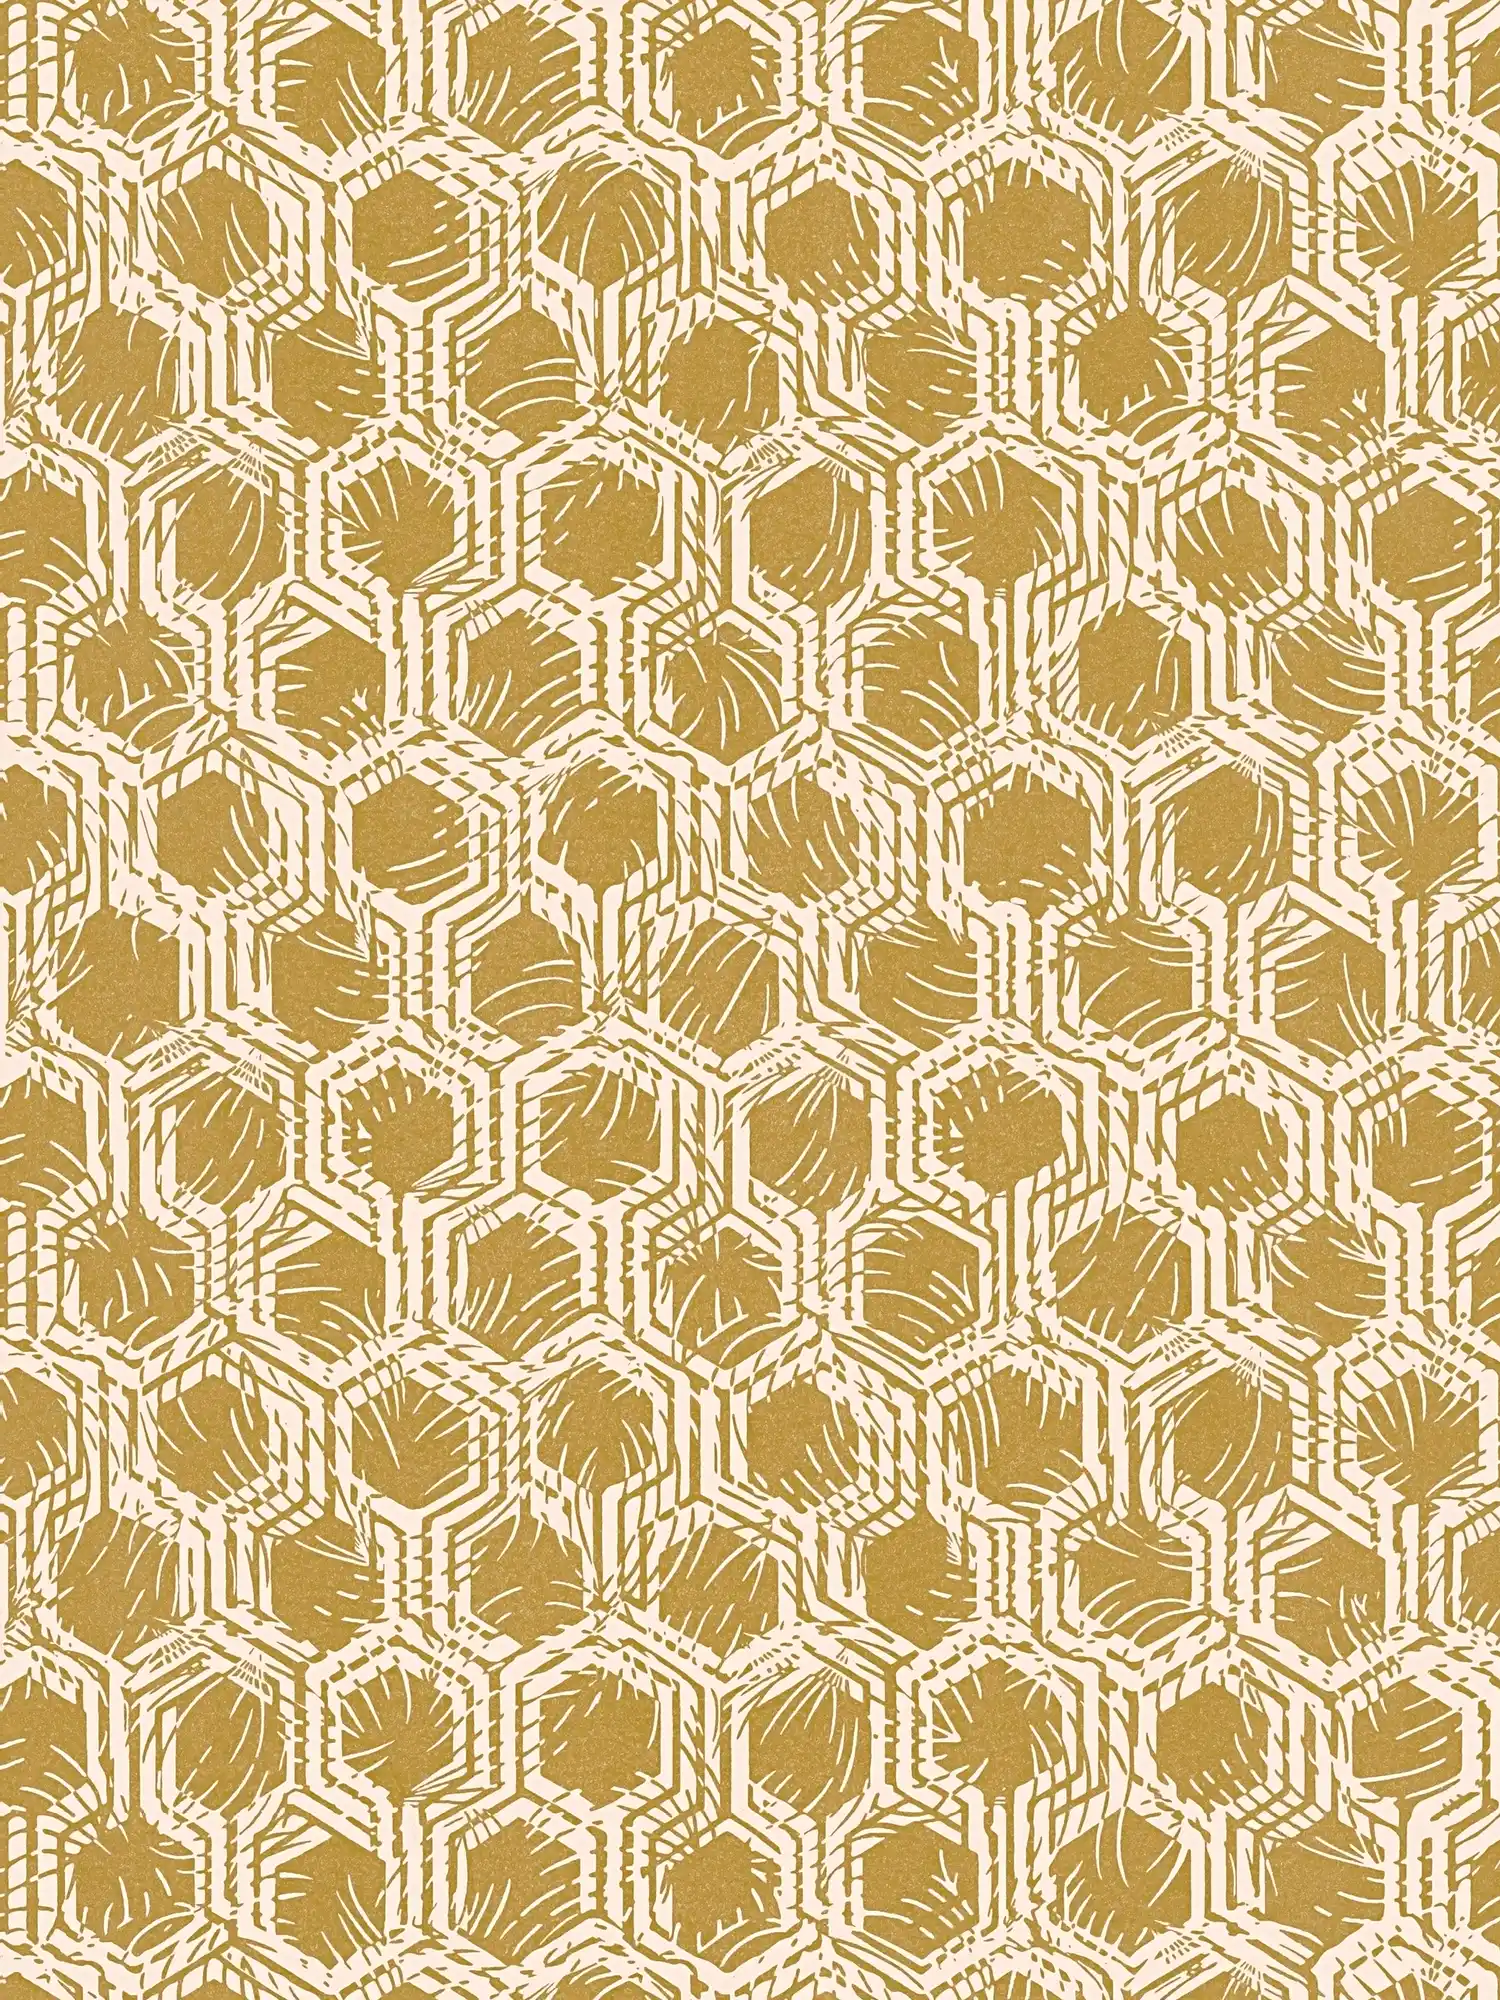 Metallic wallpaper with geometric pattern - gold, beige
